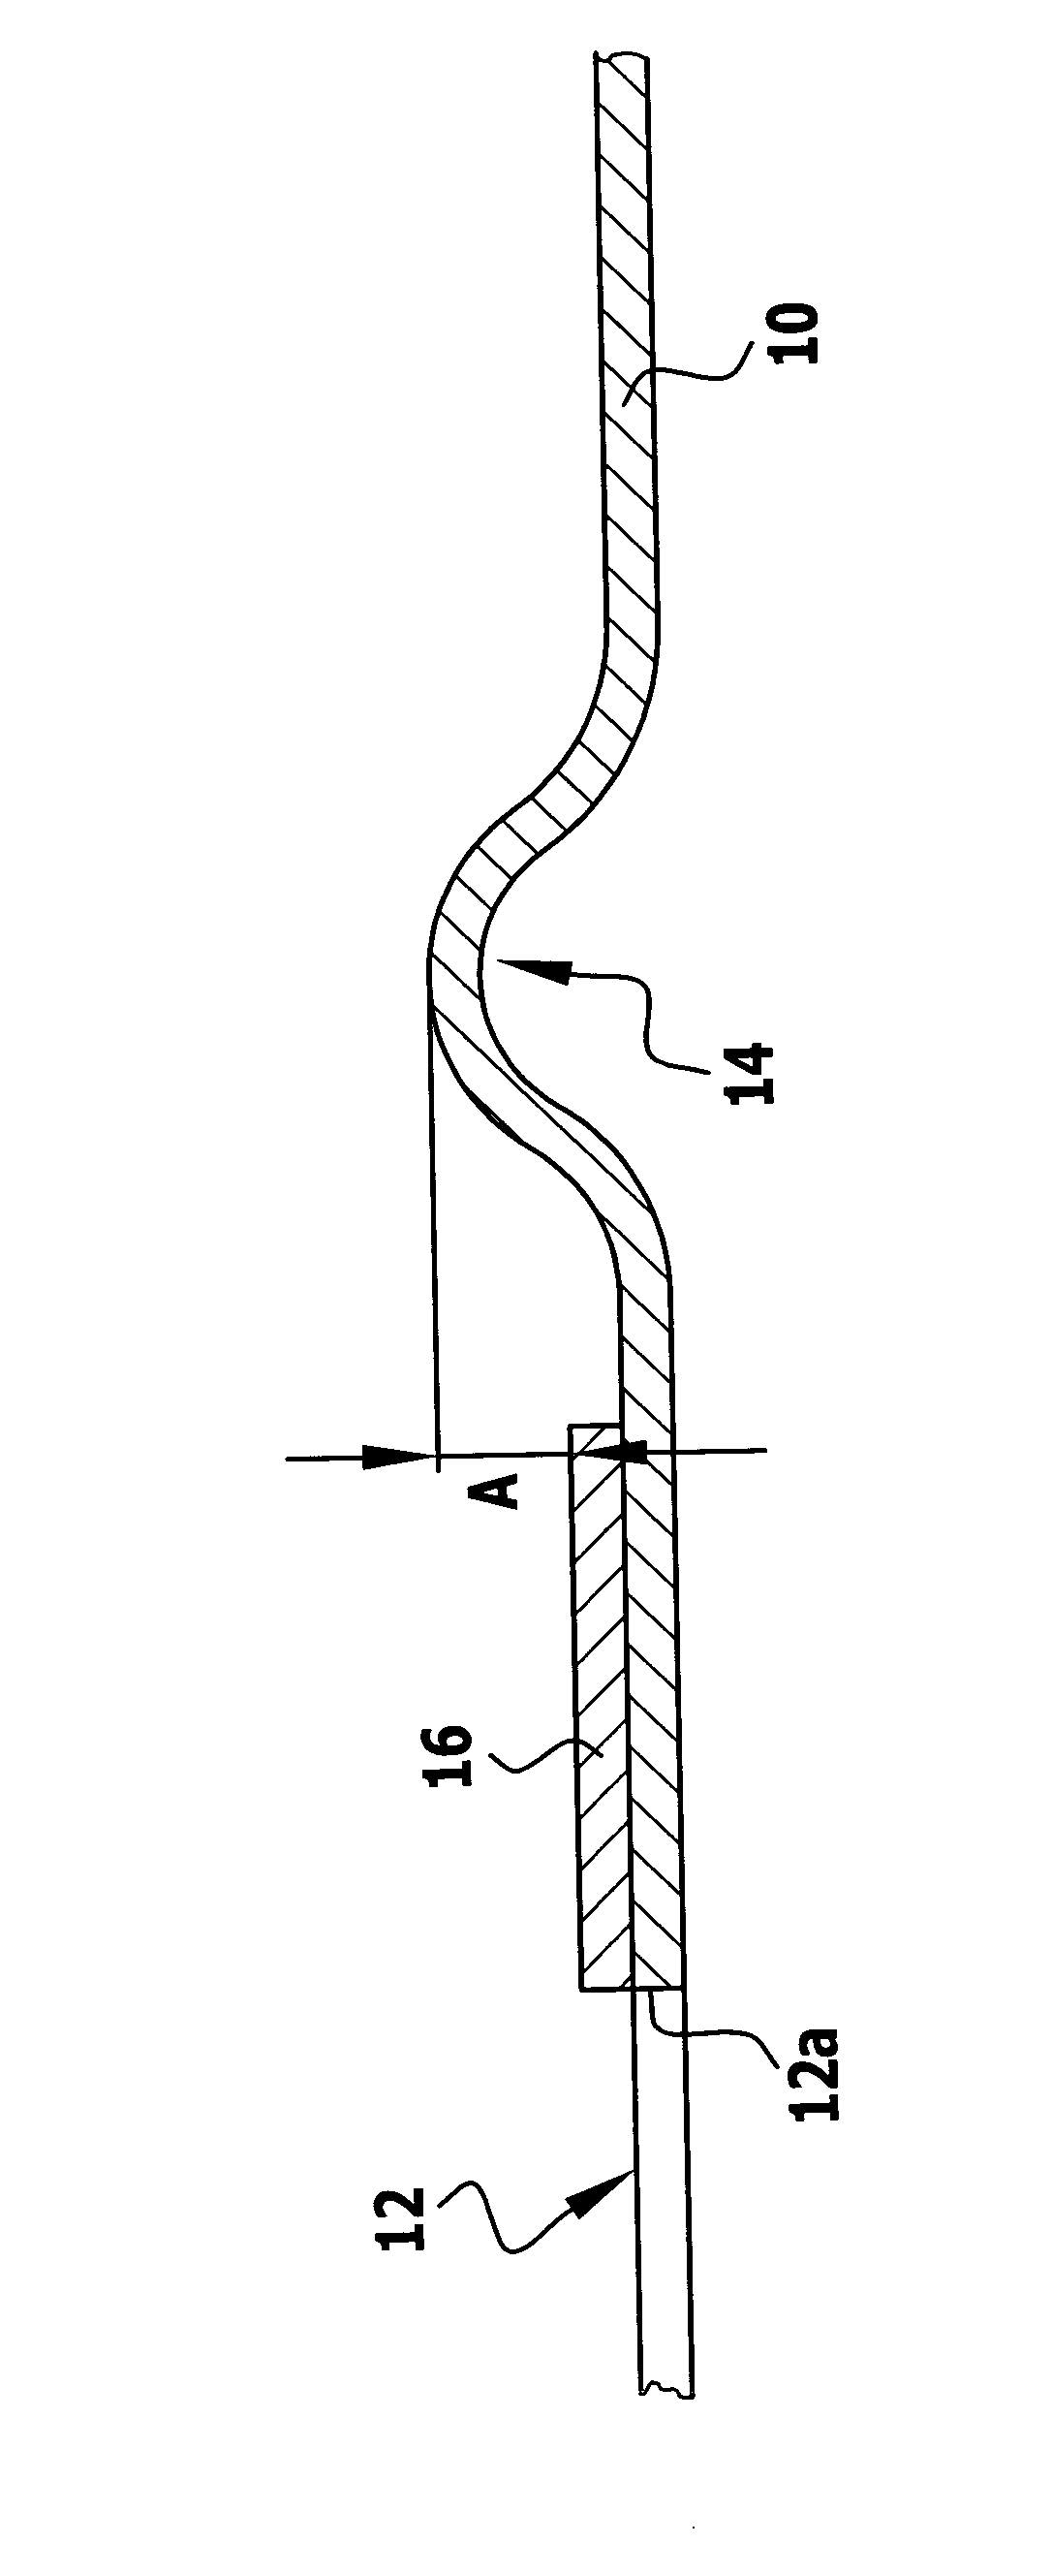 Flat gasket, in particular, cylinder head gasket